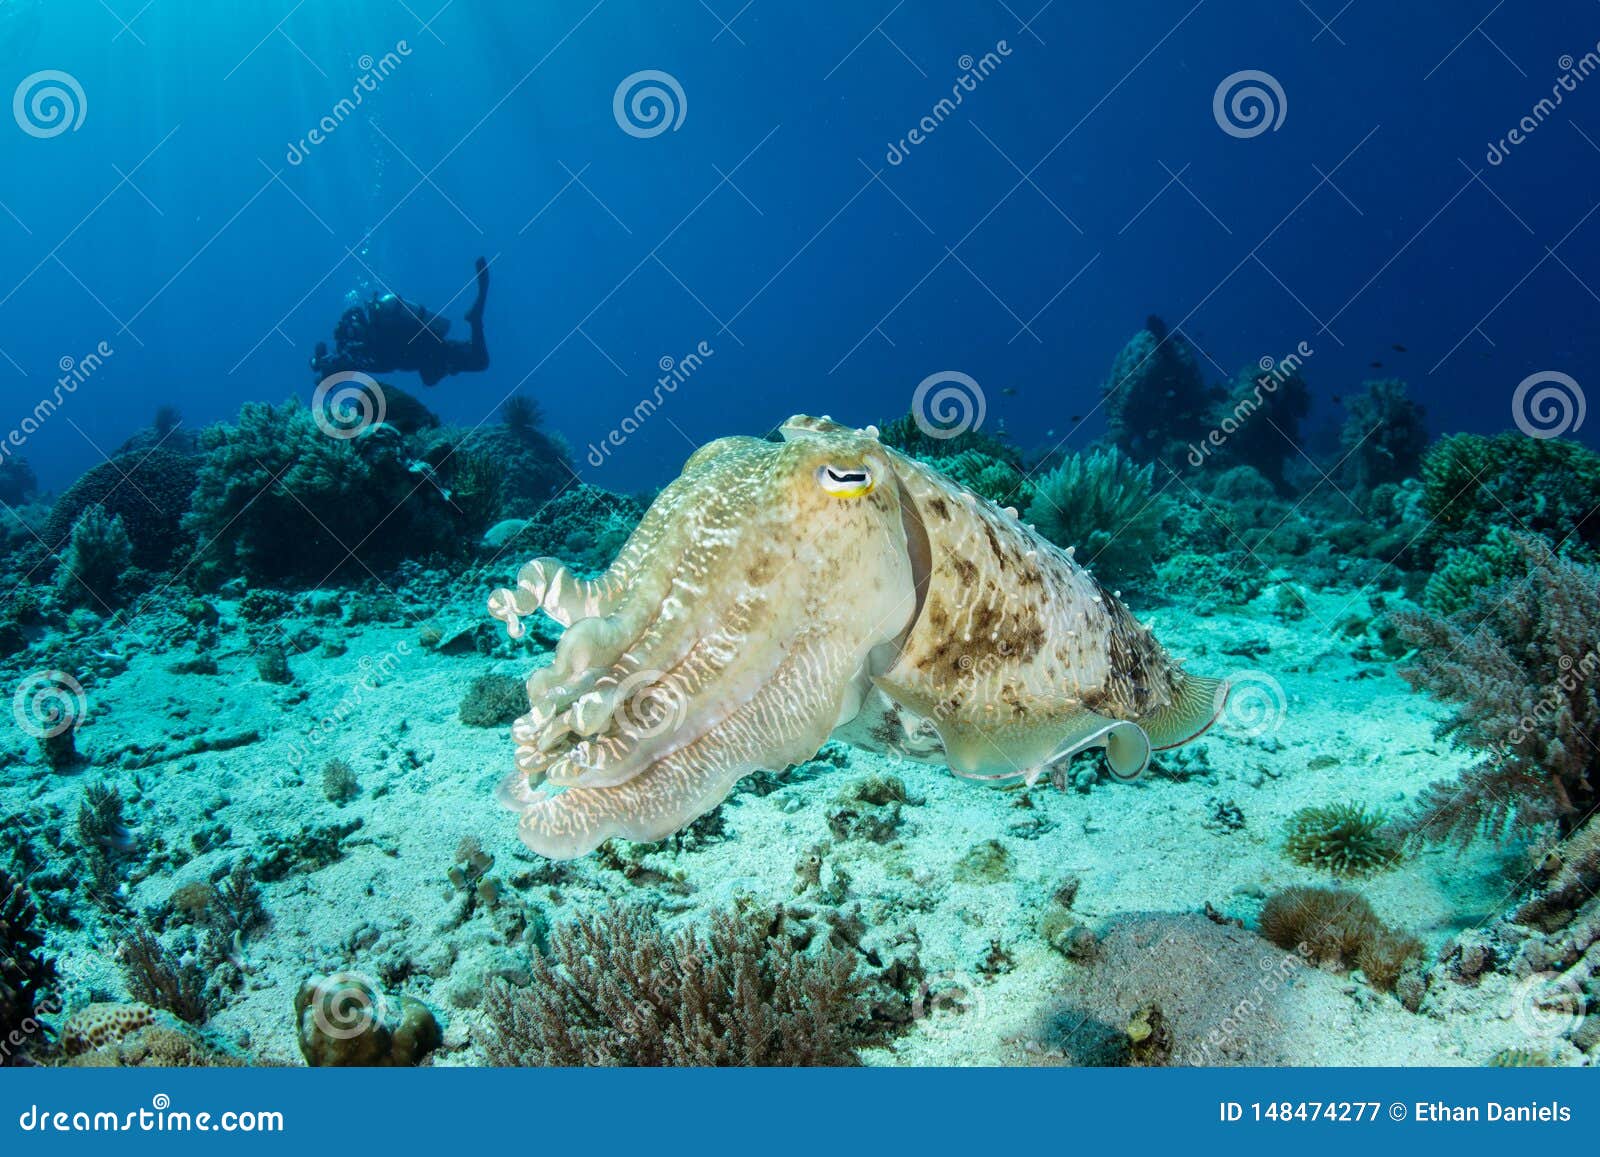 broadclub cuttlefish hovers over seafloor